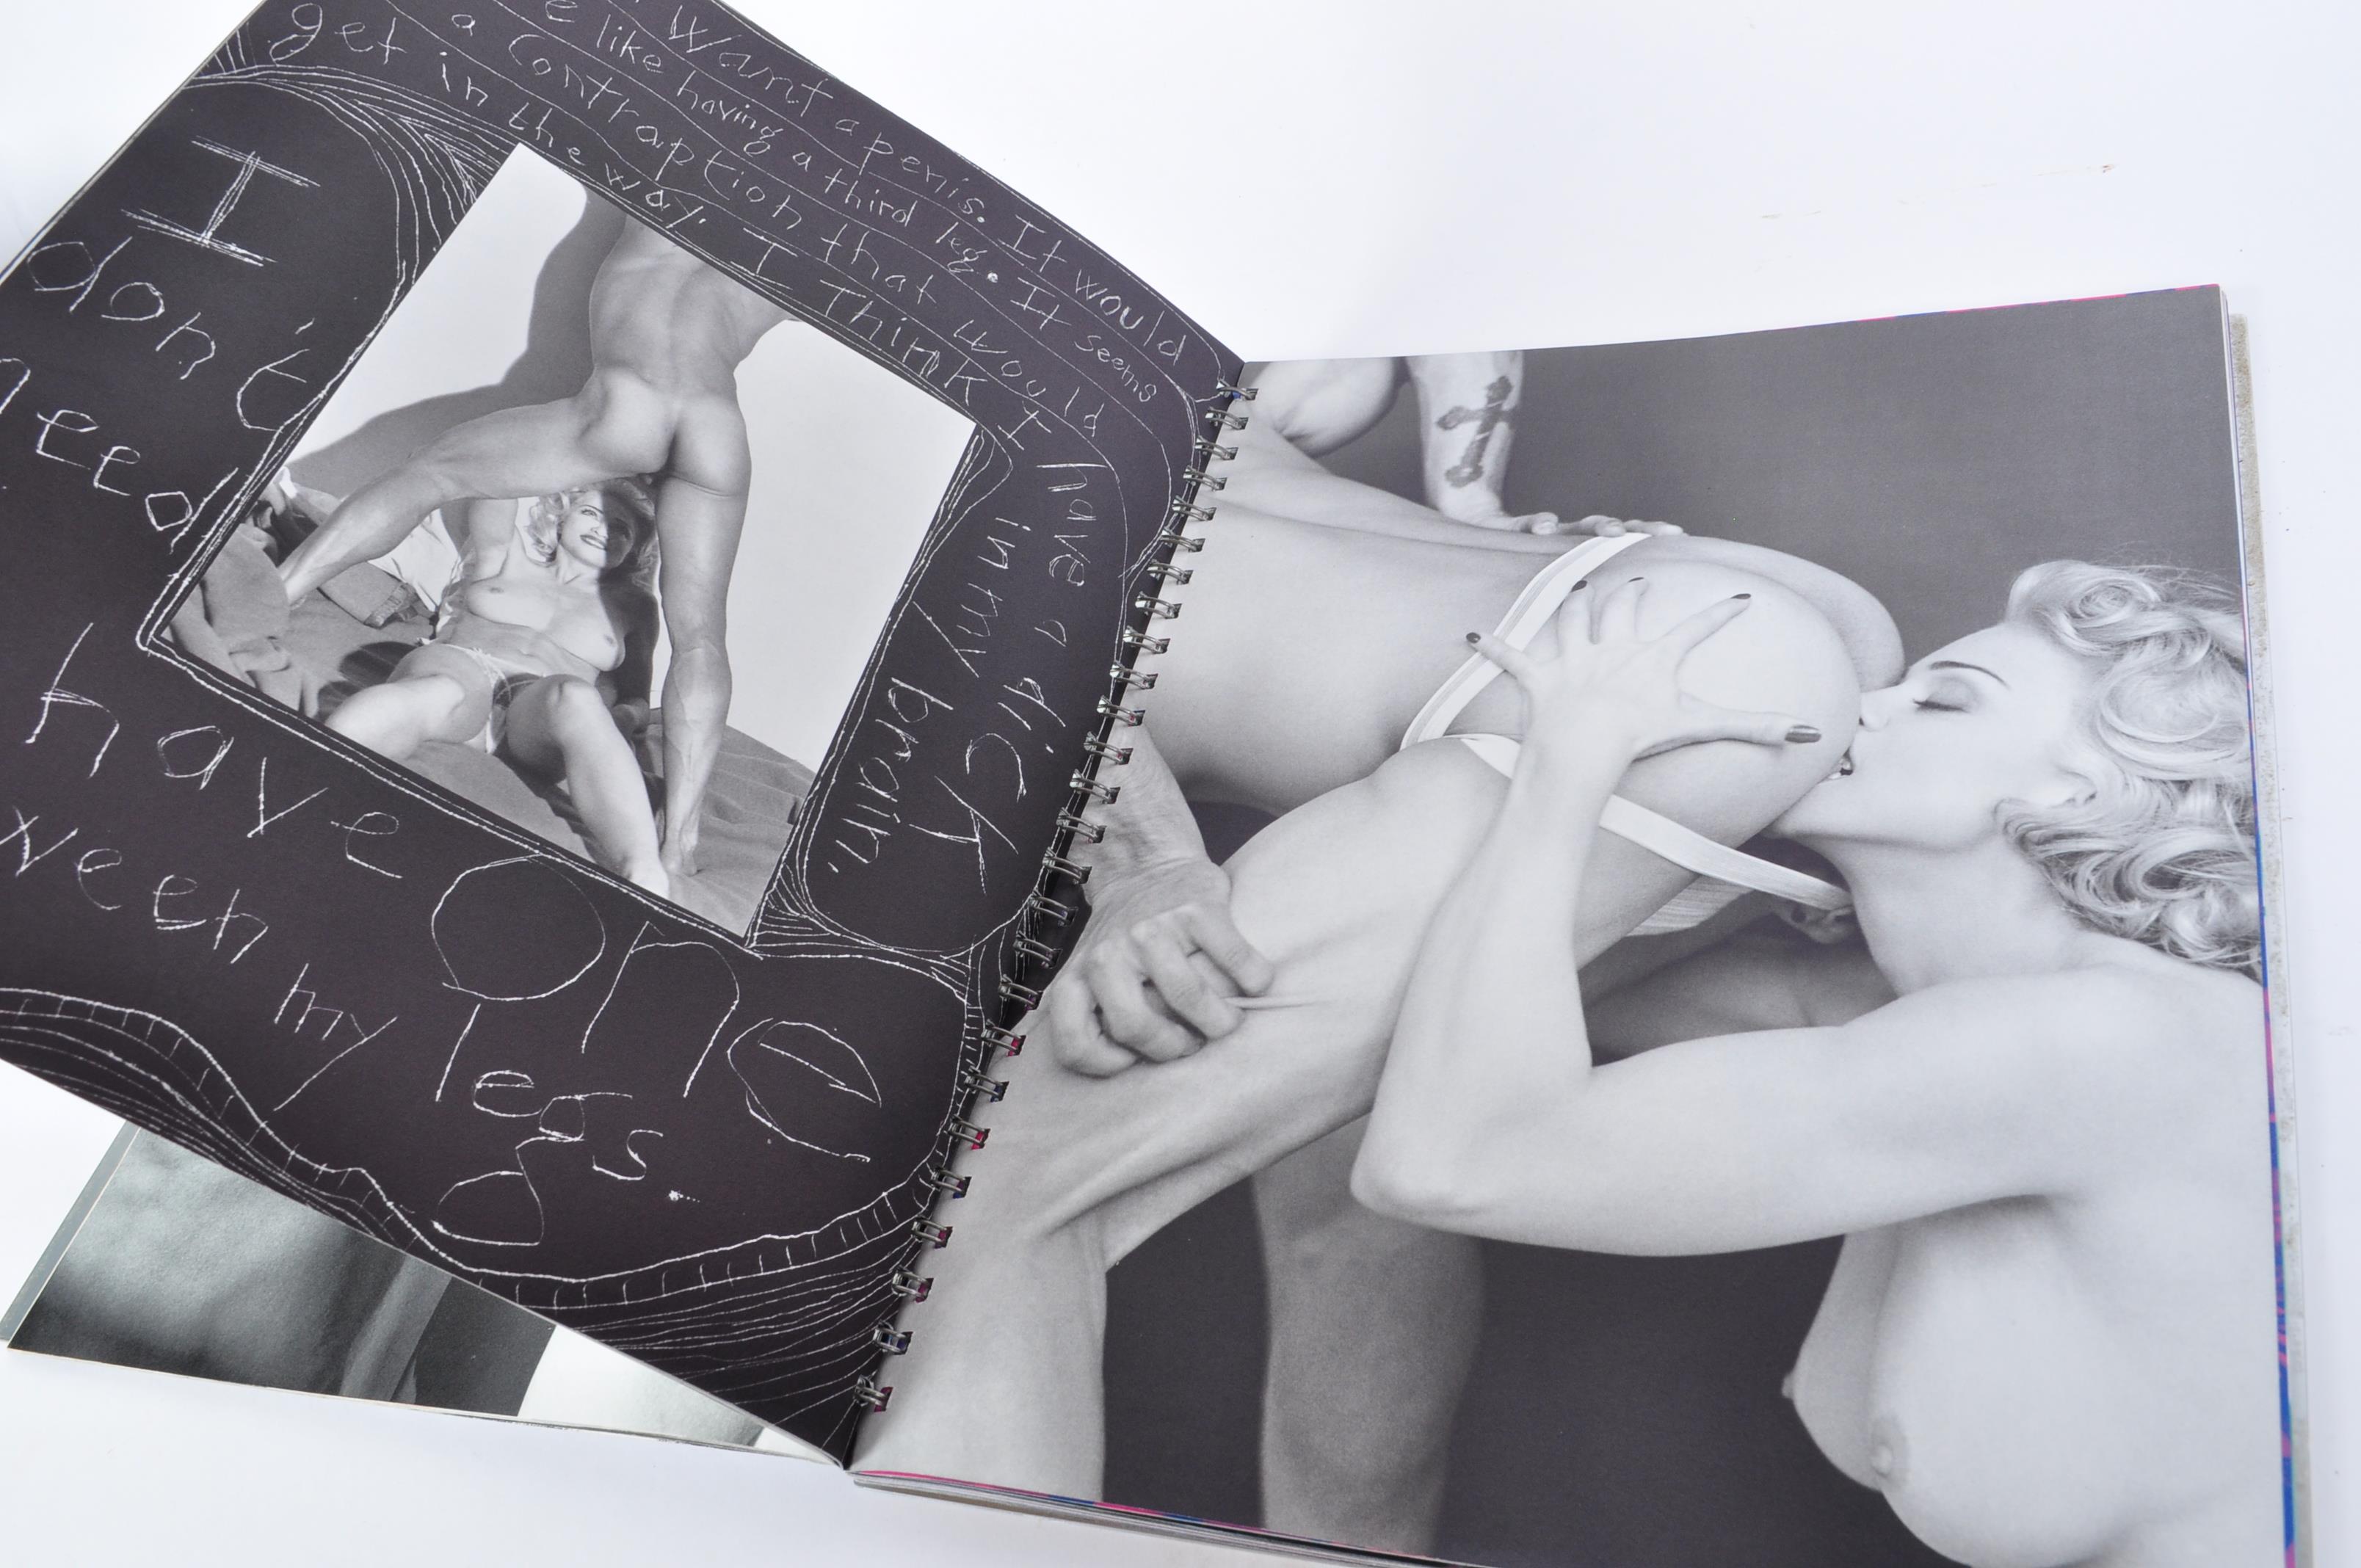 MADONNA - SEX - STEEL COVER EROTICA BOOK - Image 5 of 6